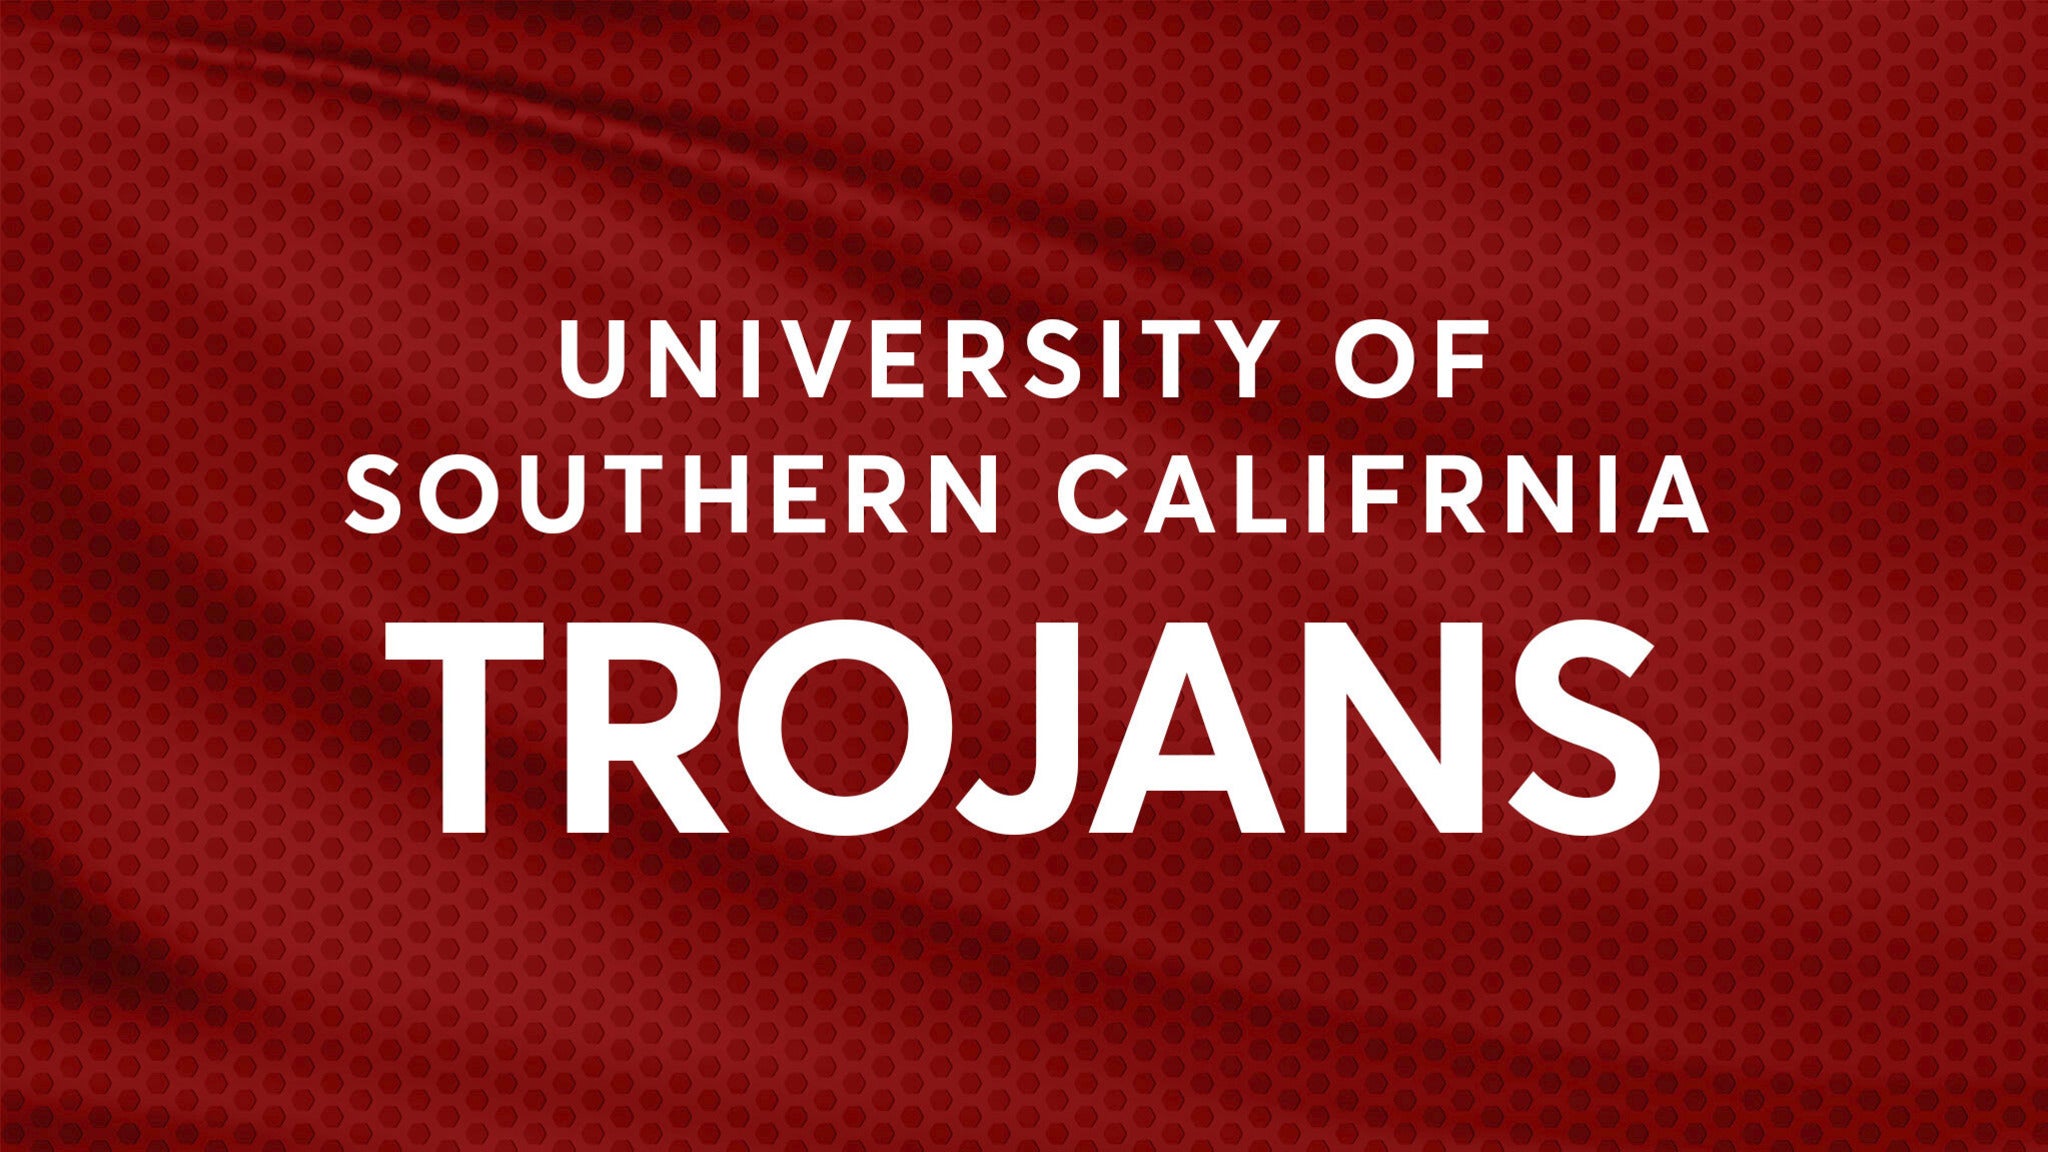 USC Trojans Football vs. Arizona Wildcats Football - Los Angeles, CA 90037